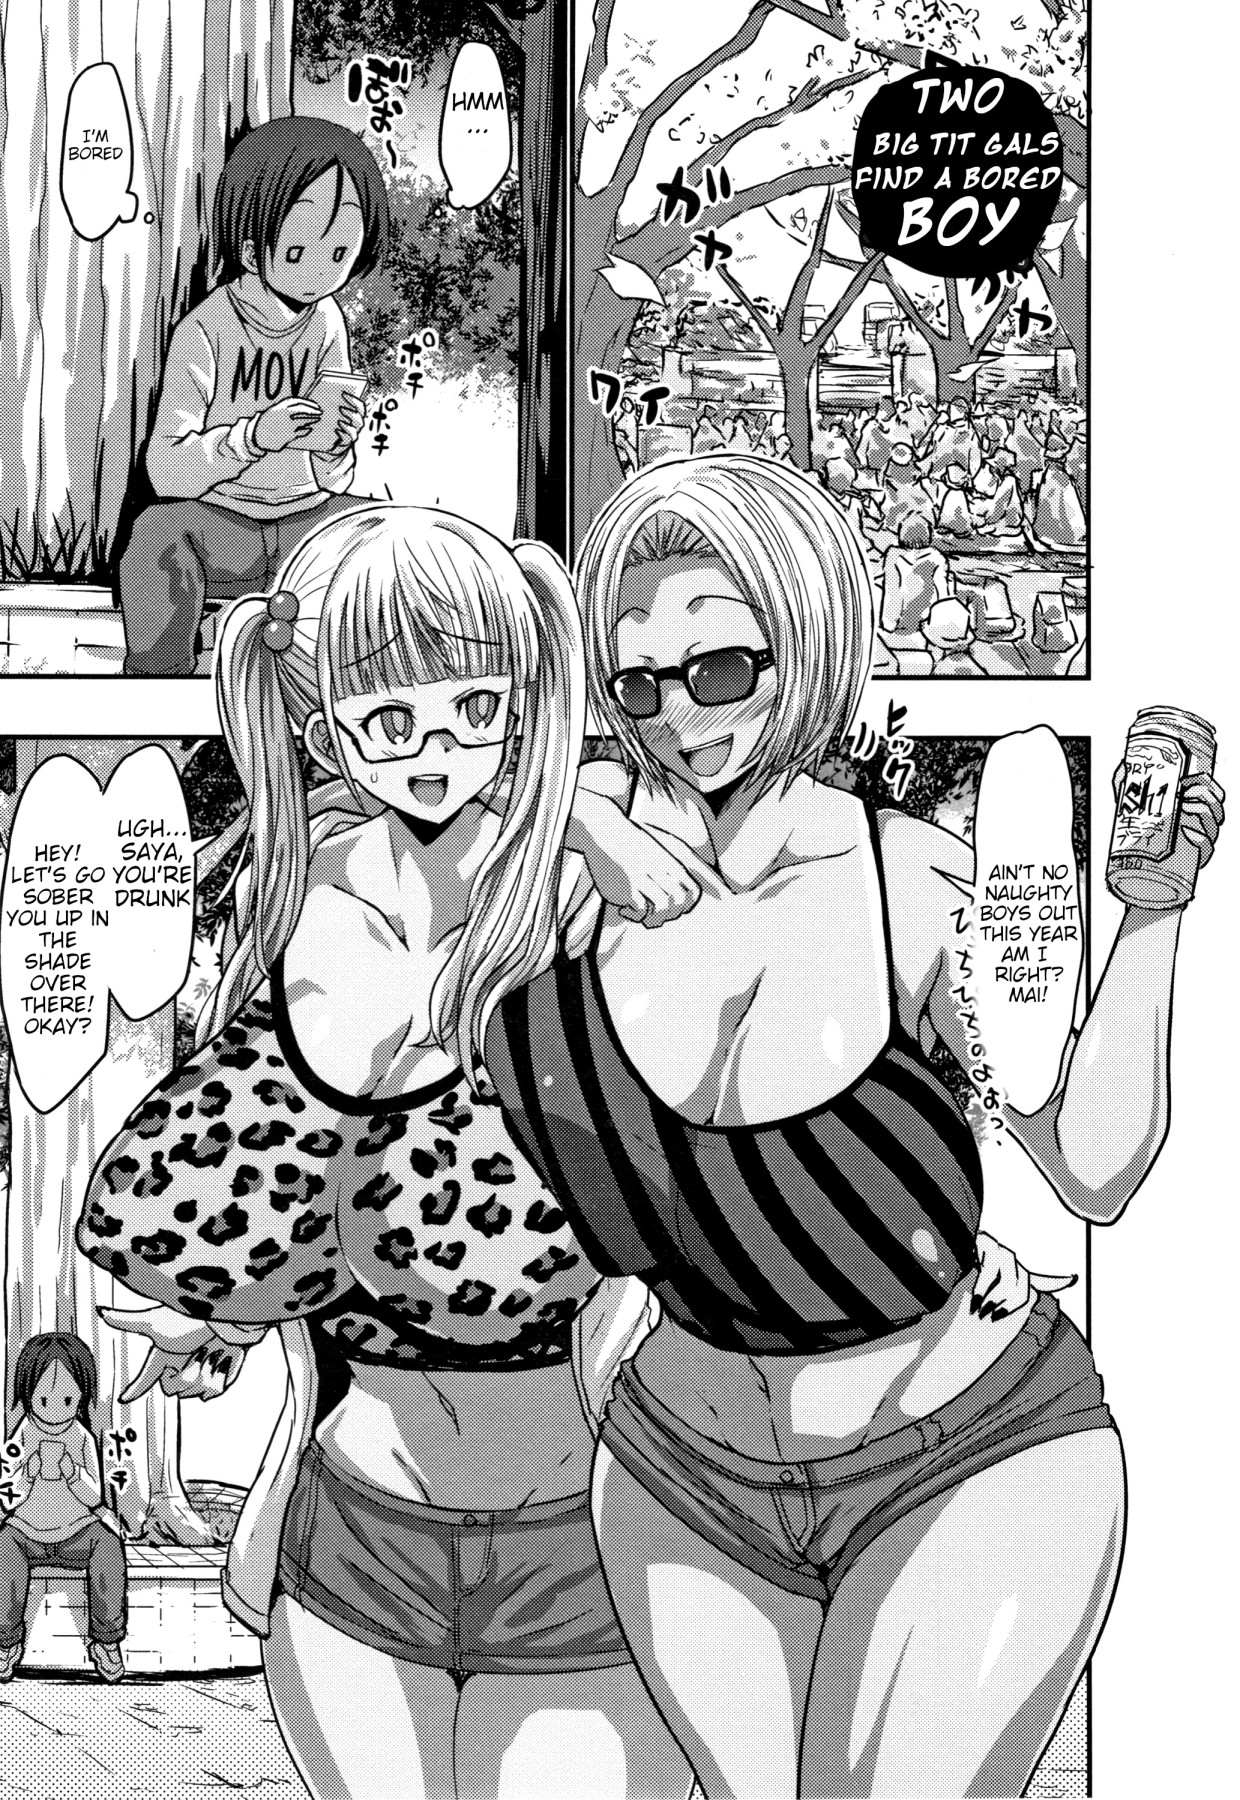 Hentai Manga Comic-Two Big Tit Gals Find A Bored Boy!-Read-1